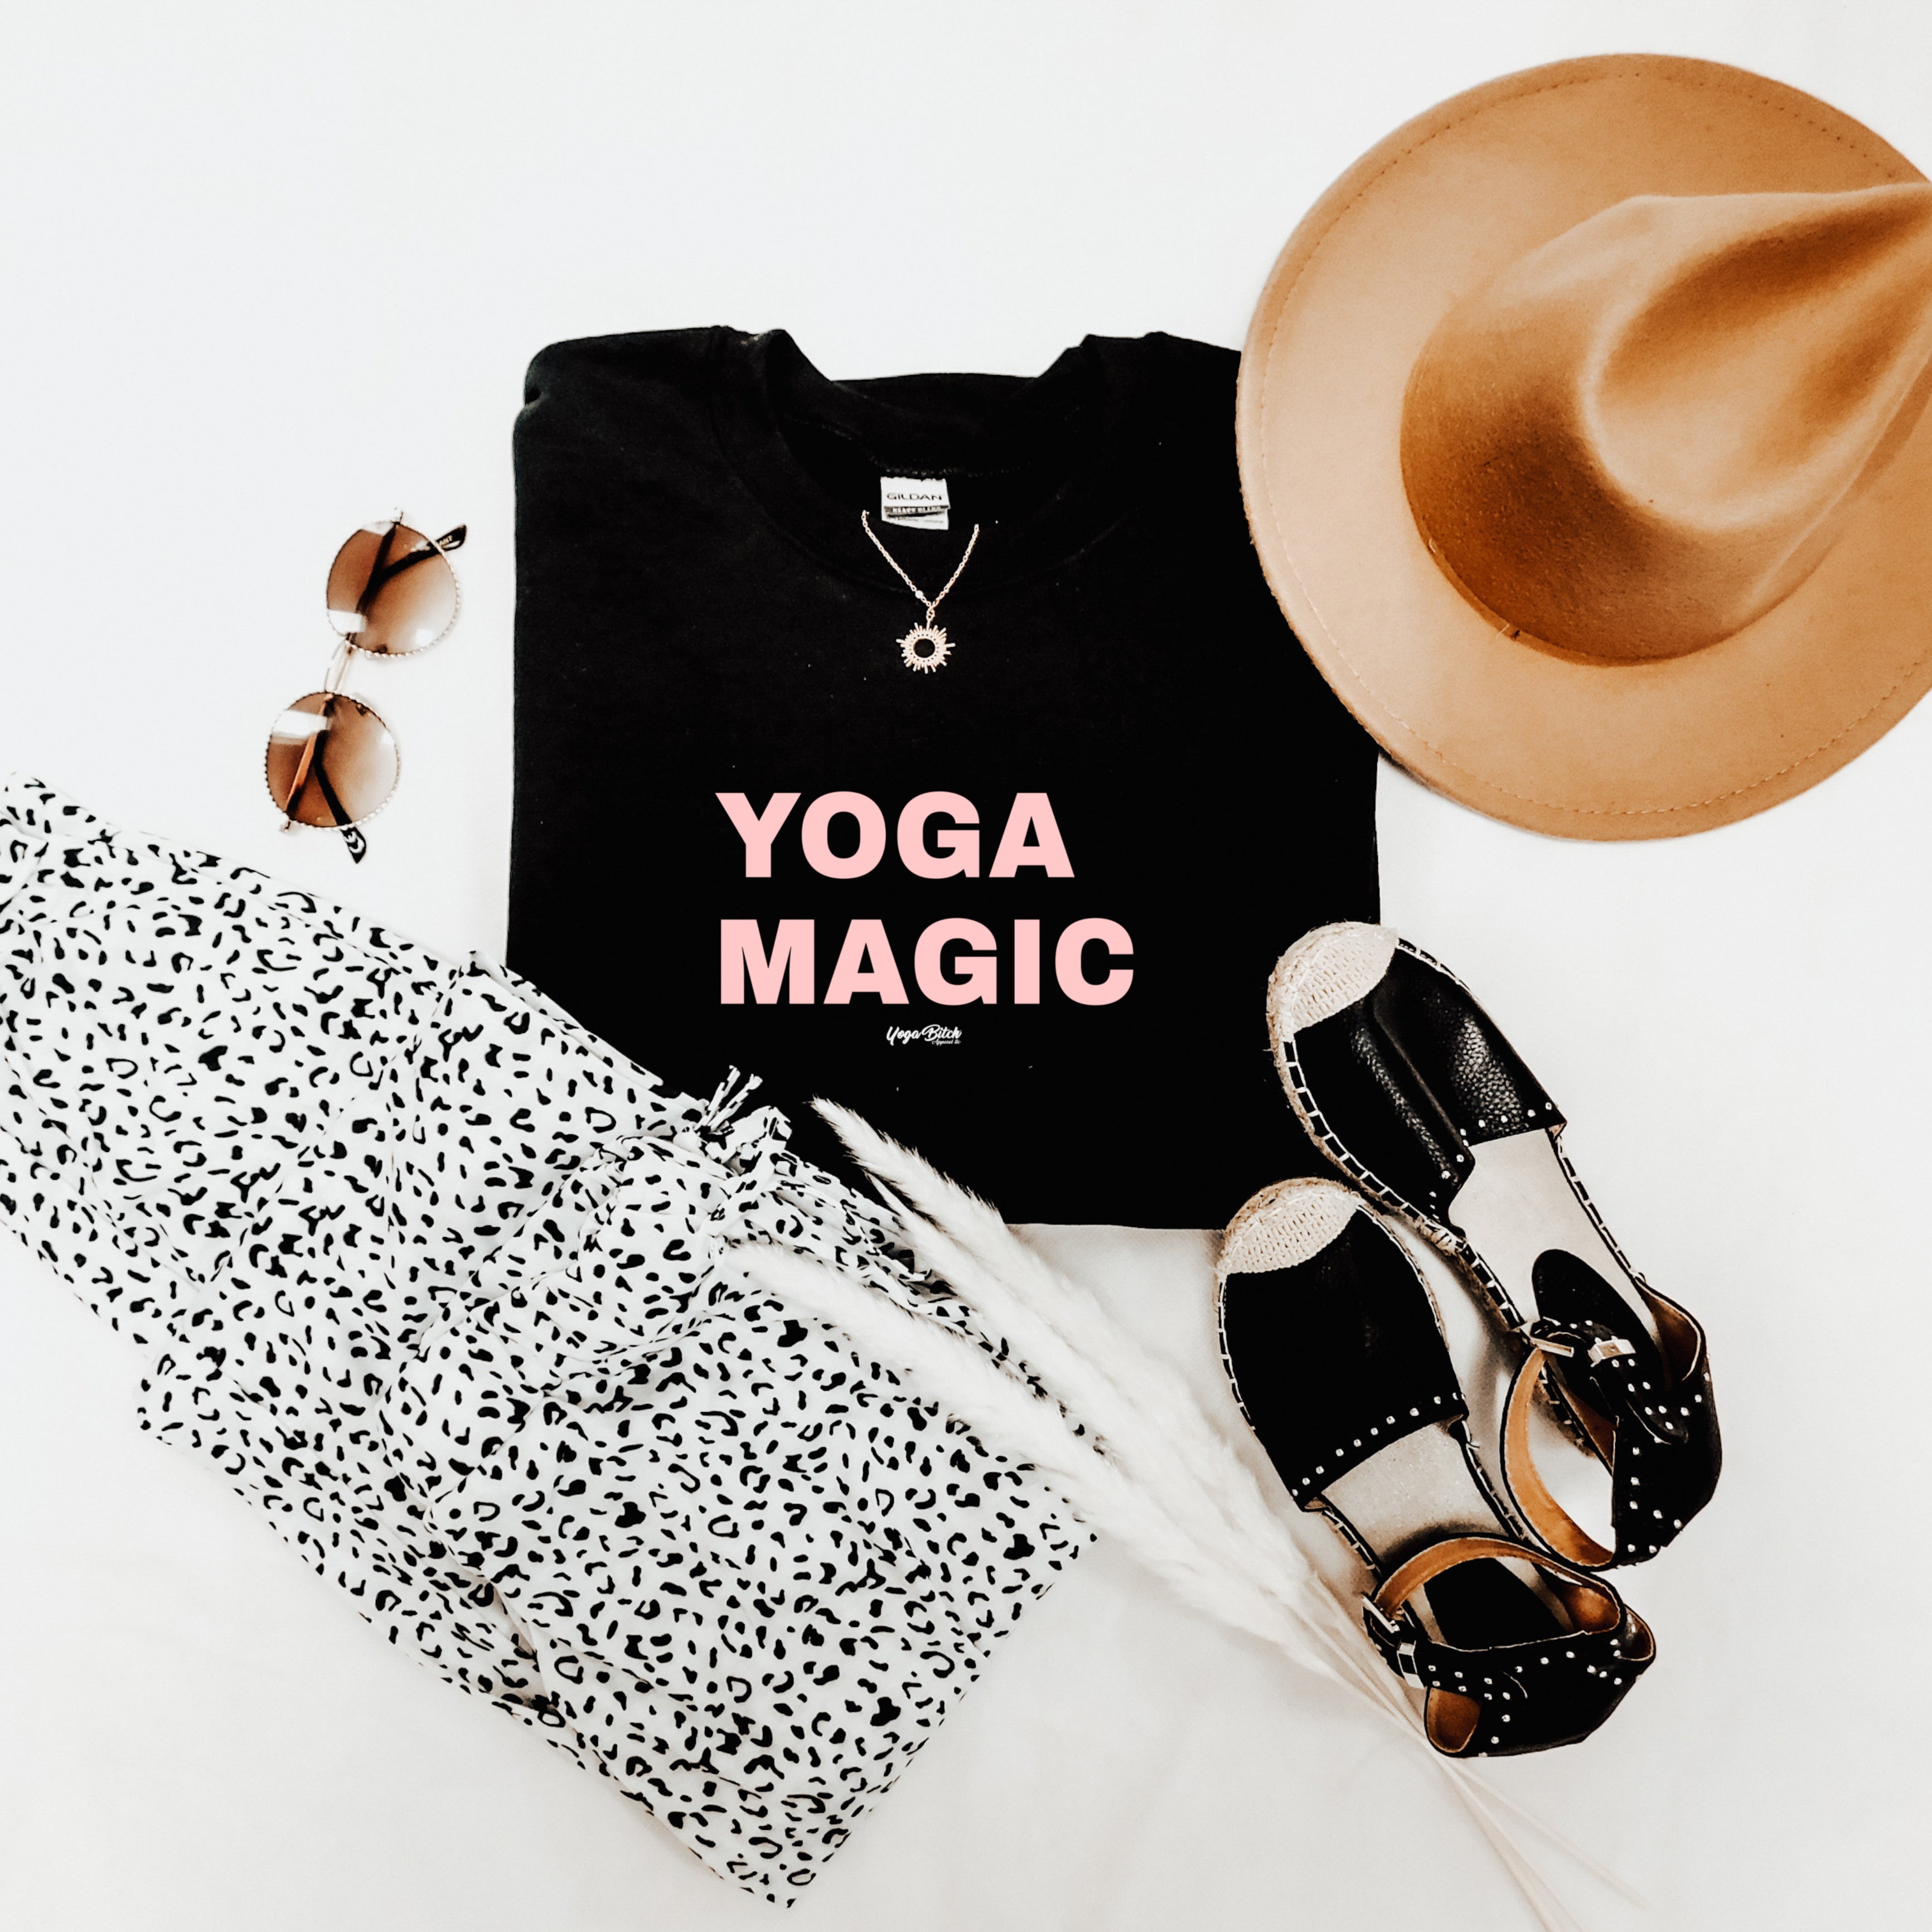 Yoga Magic Tee - Yoga Bitch